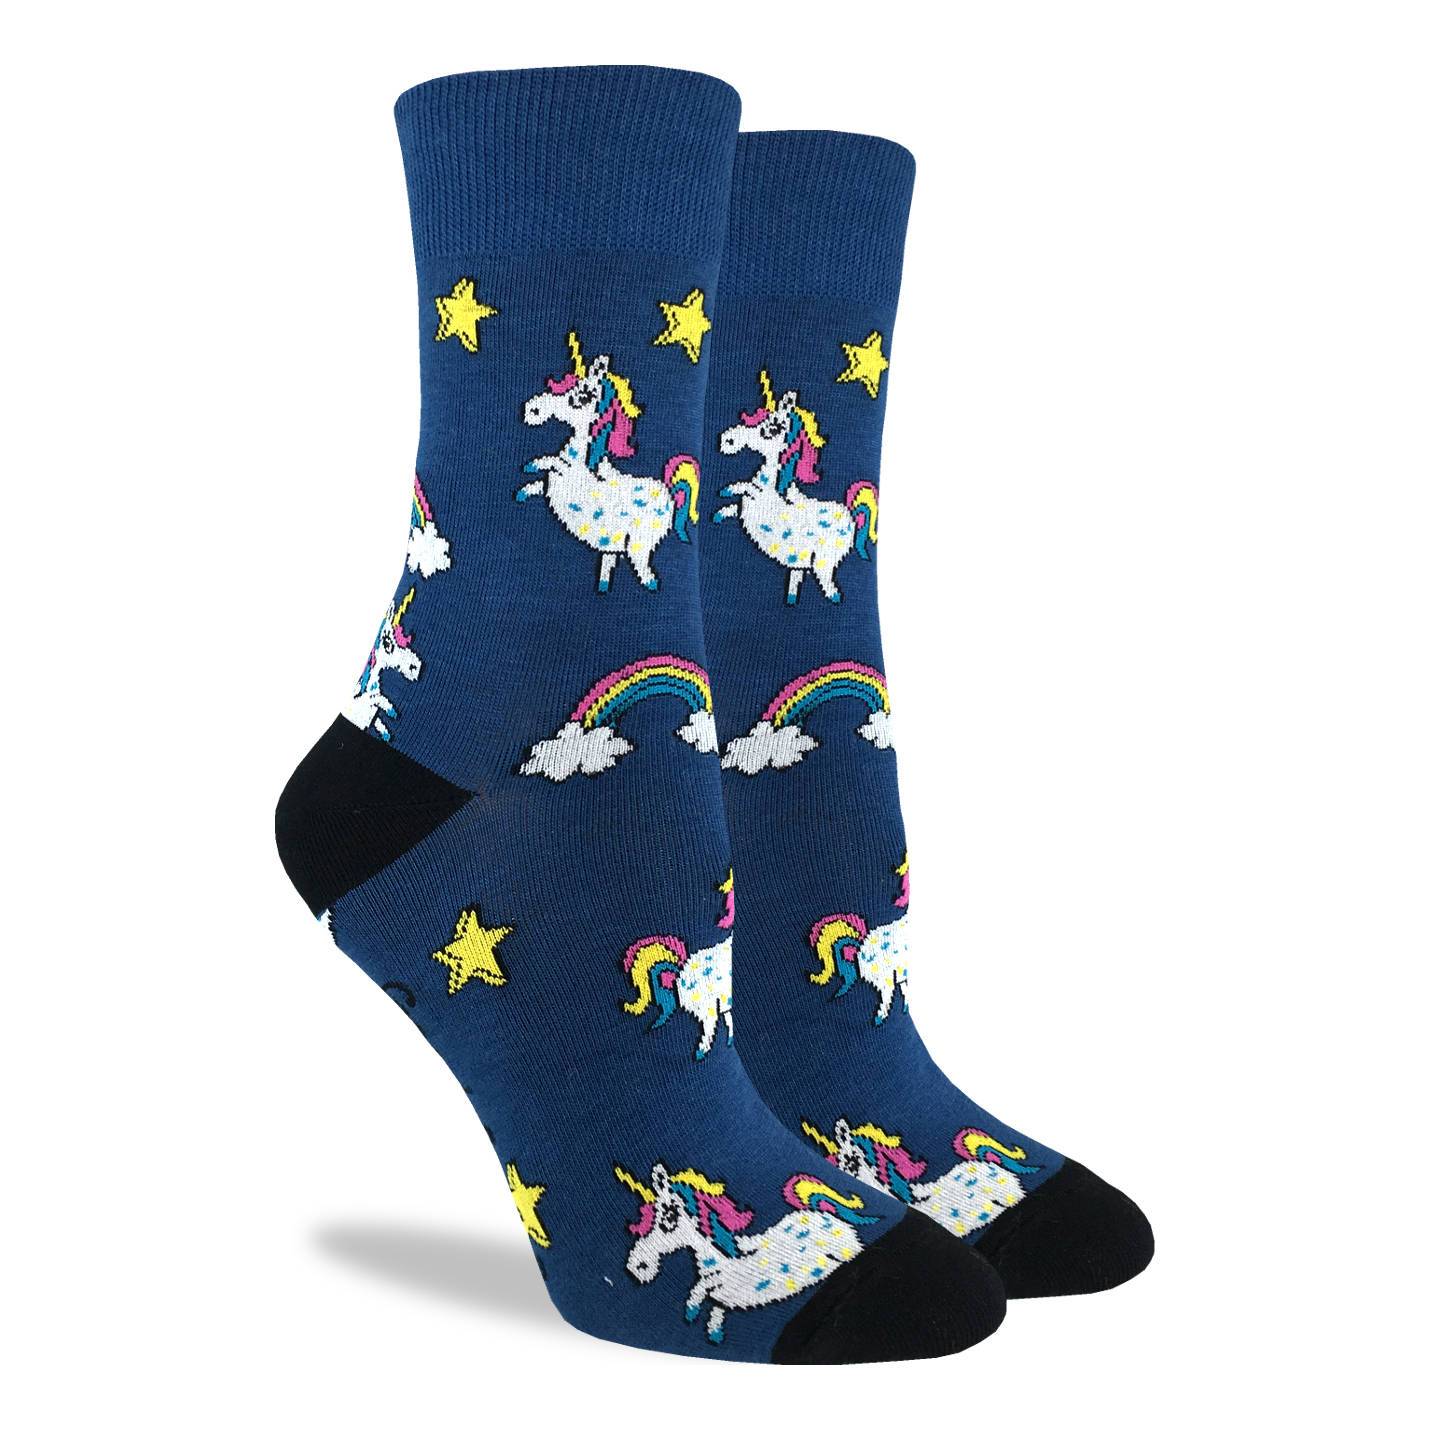 Women's Unicorns Socks - Shoe Size 5-9